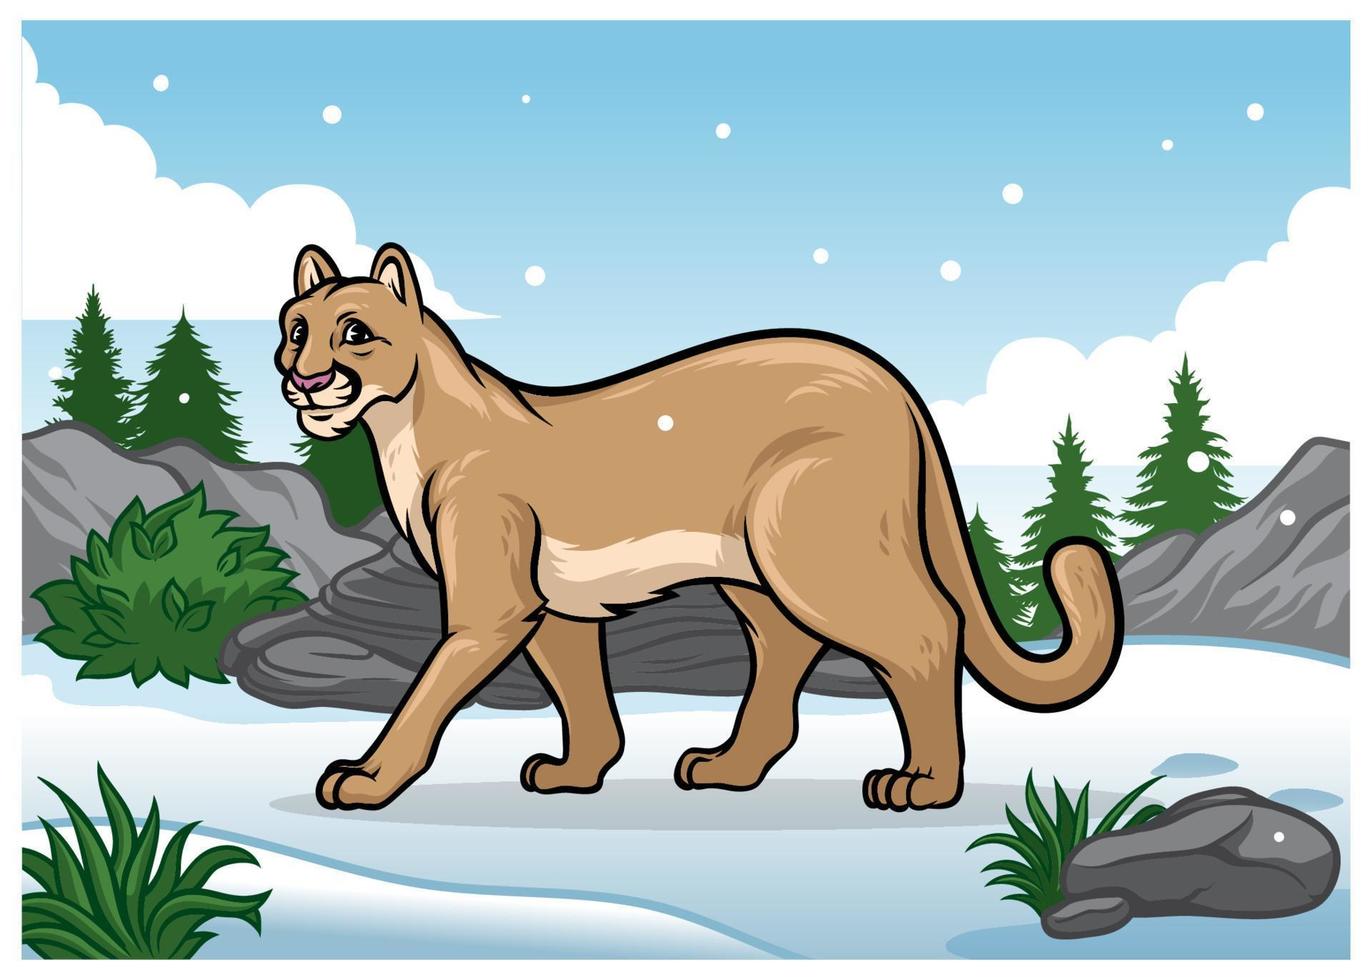 cartoon cougar illustration in the snowy mountain vector